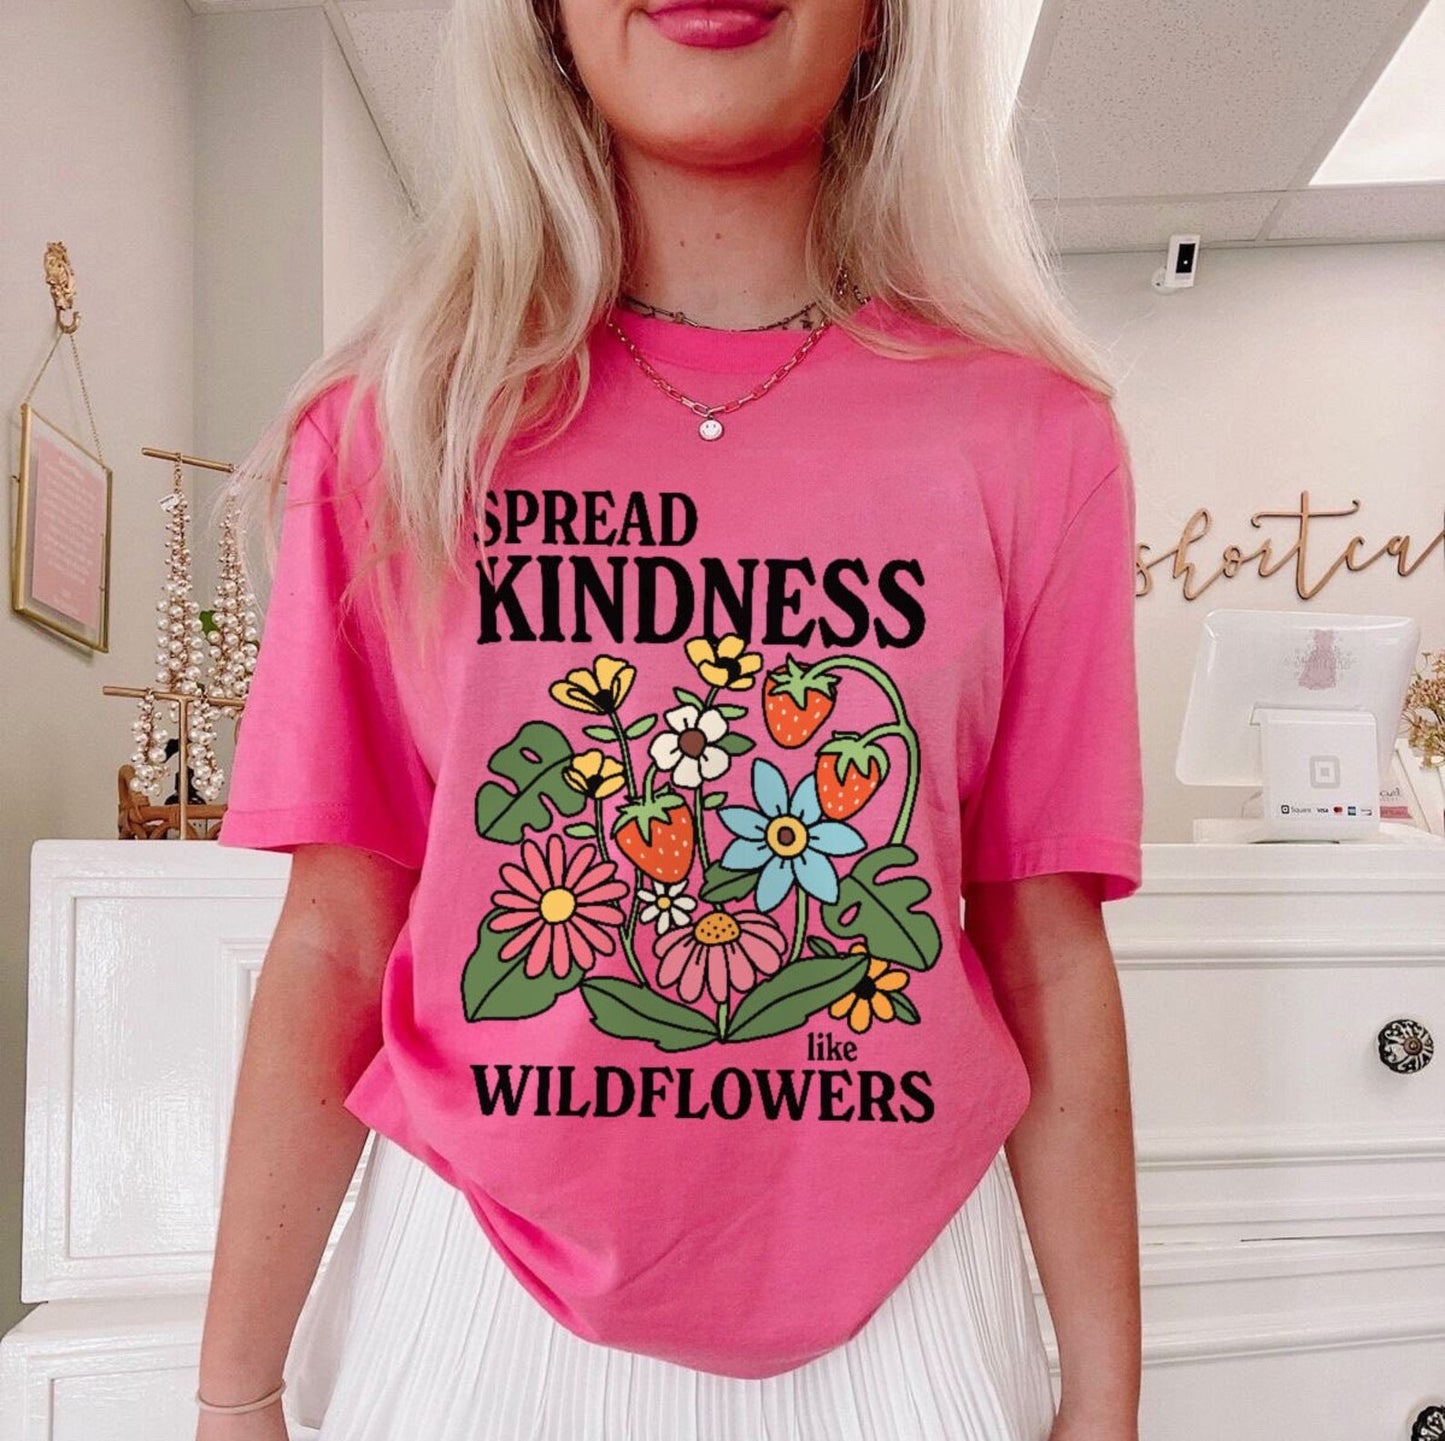 'Spread Kindness like wildflowers' T-shirt